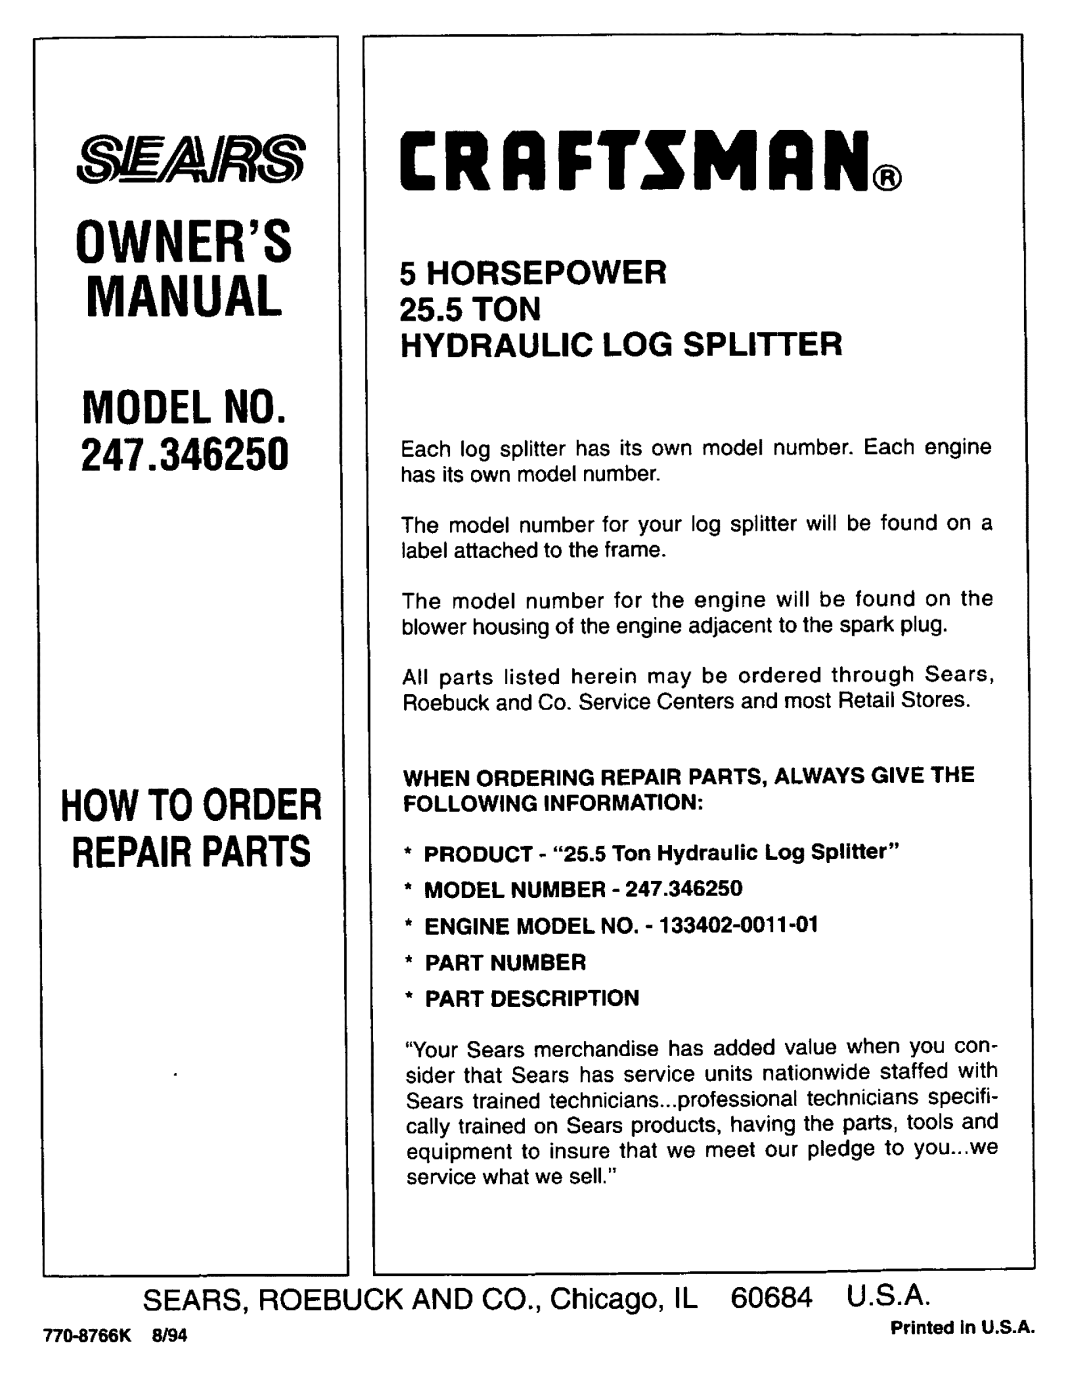 Sears owner manual Owners Manual, Howtoorder Repairparts, Crrftsmrn, MODELNO 247.346250 